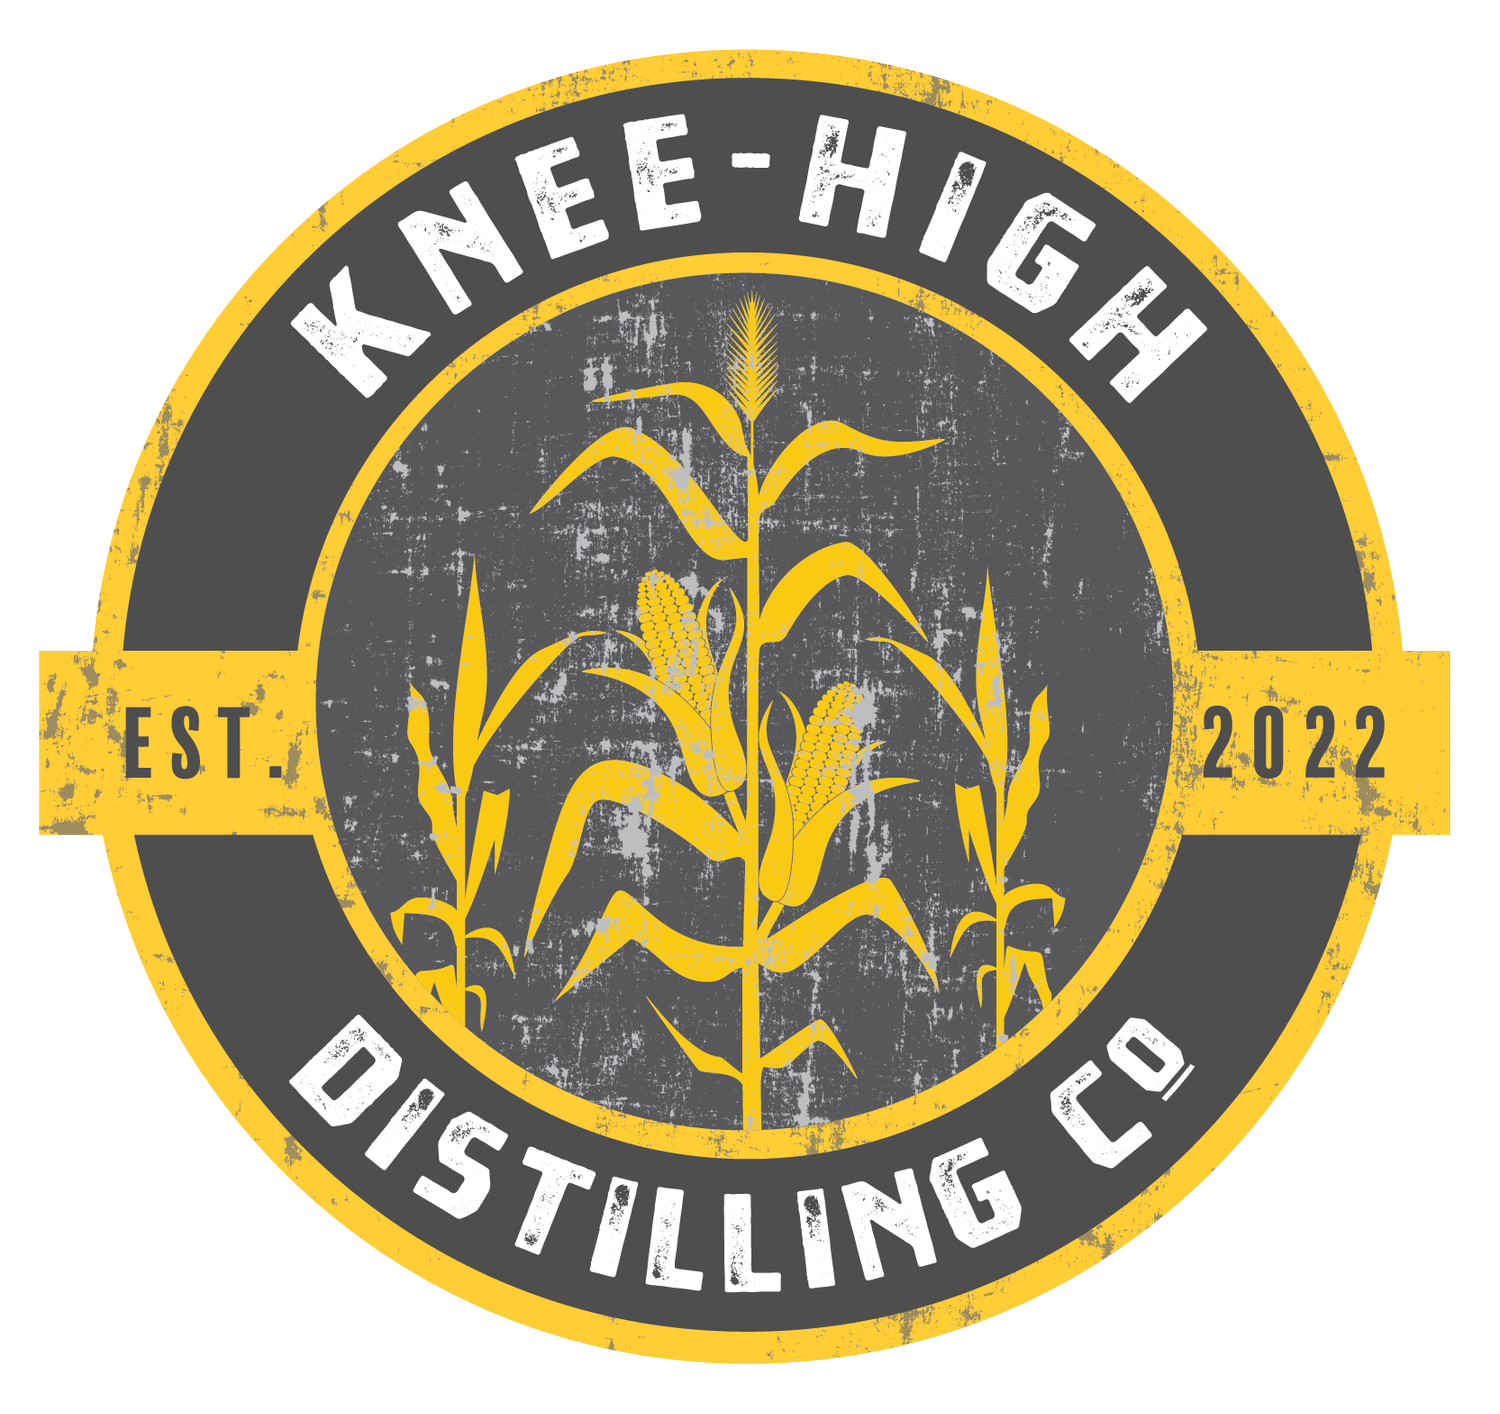 Knee-High Distilling Co.